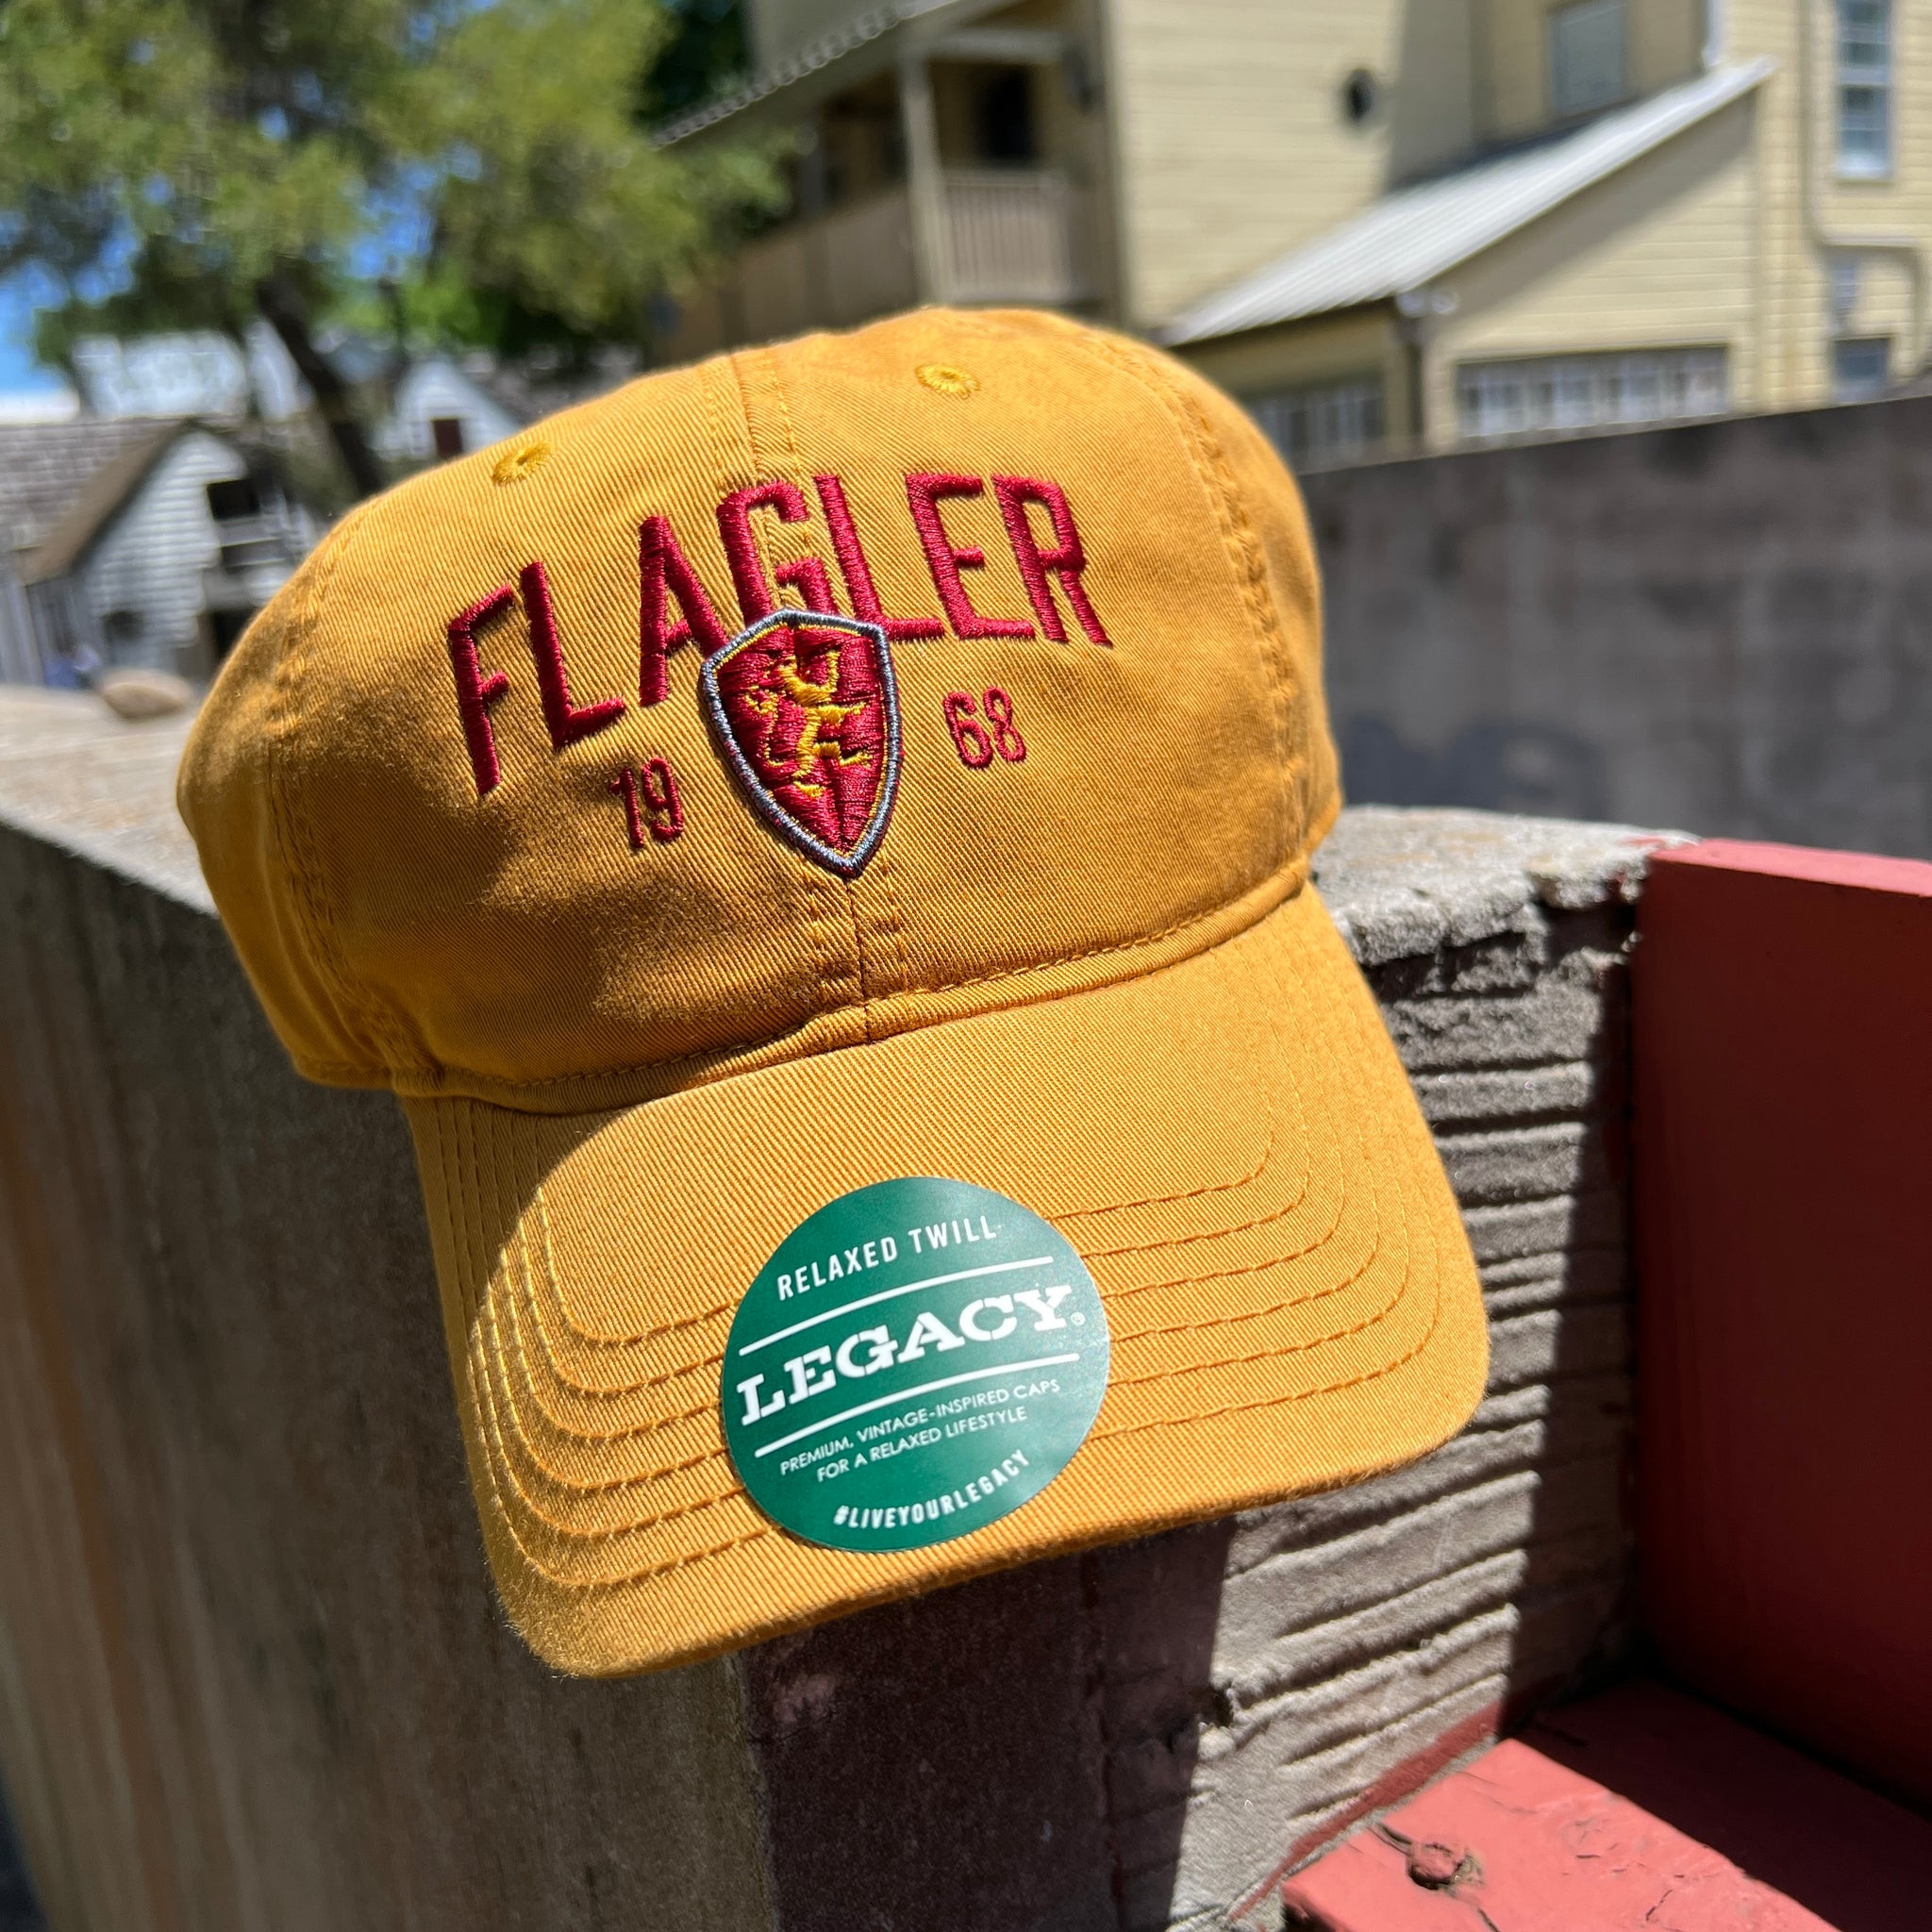 gold hat with red letters saying Flagler over 19 flagler college shield logo 68